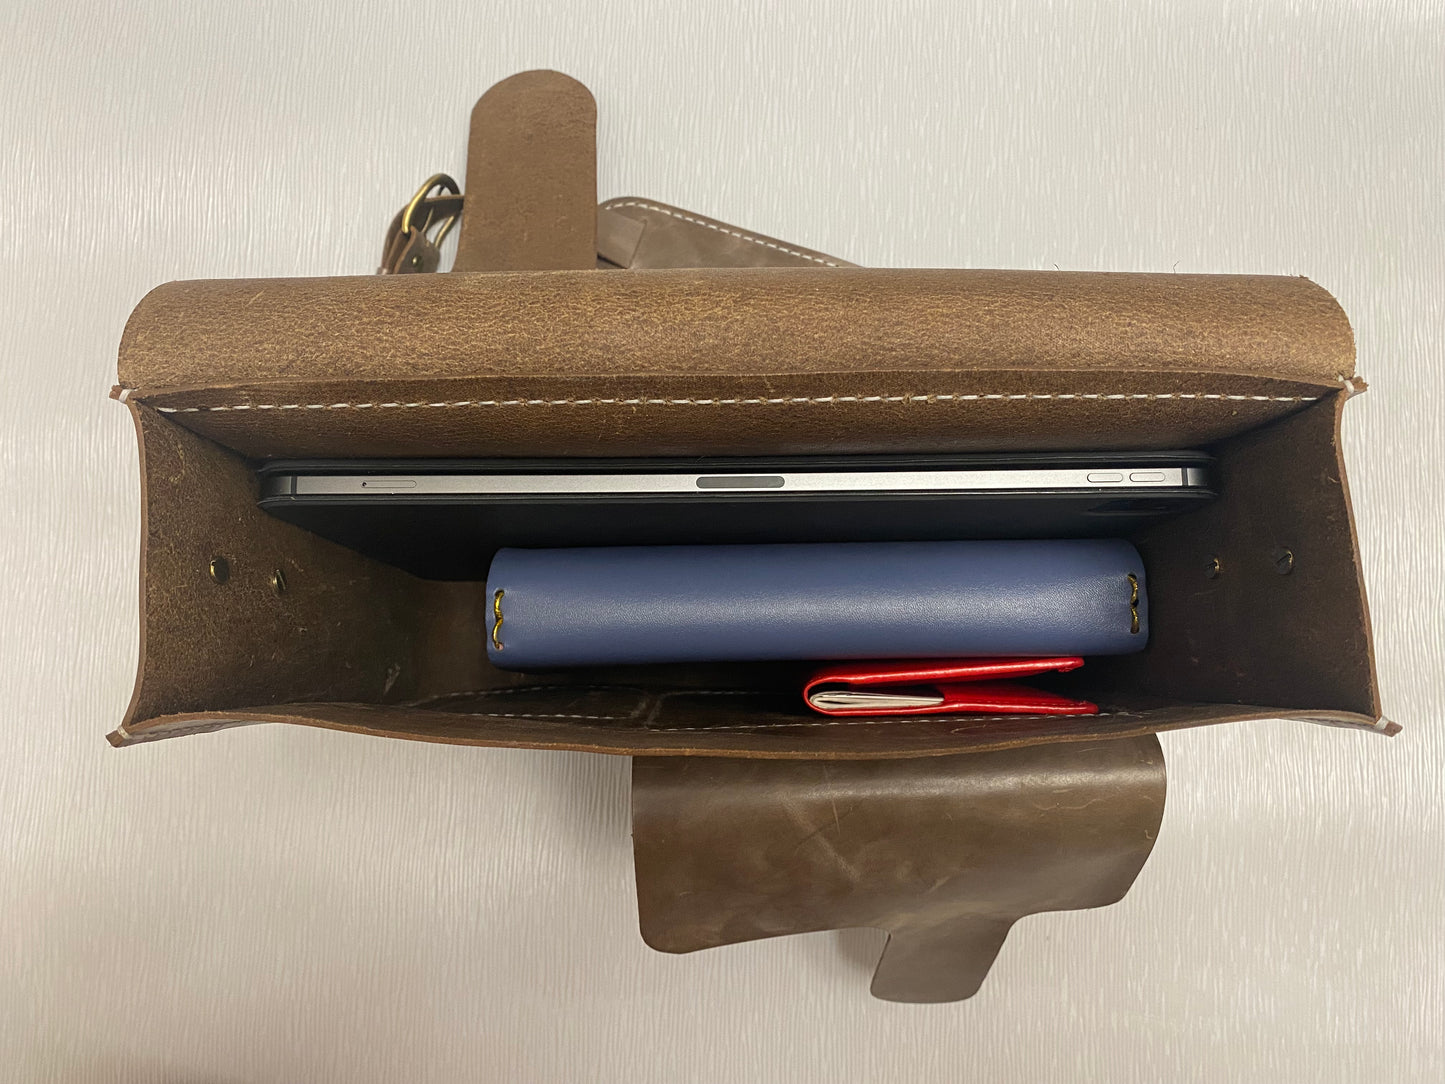 12” Handmade Leather Messenger Bag